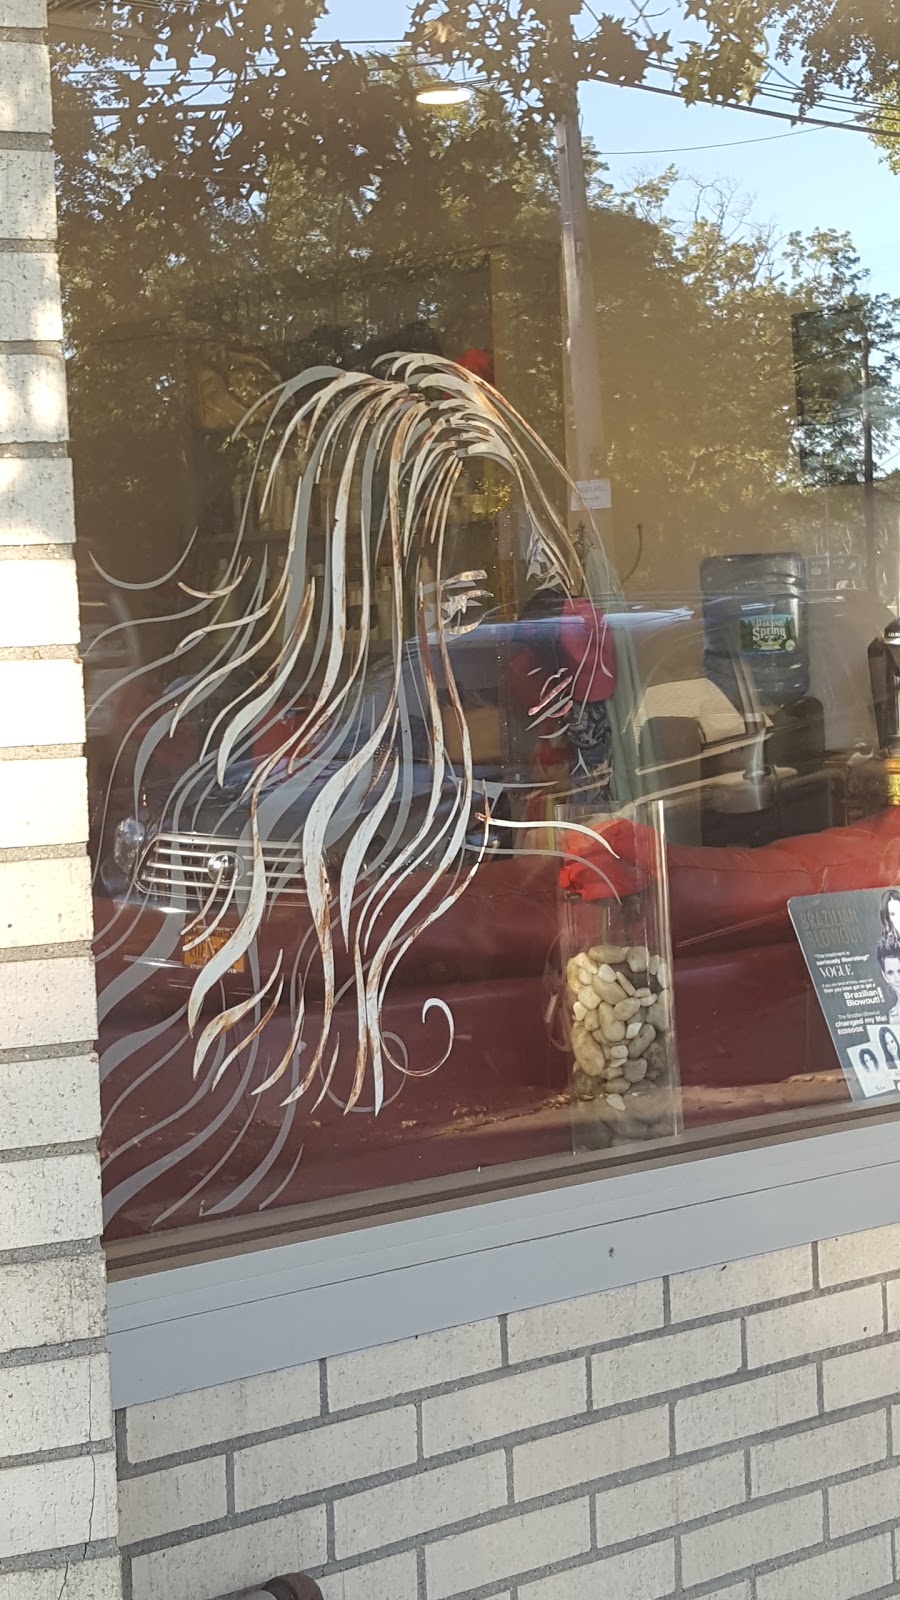 Florell hair Salon | 4 Broadway, Valhalla, NY 10595 | Phone: (914) 441-7954